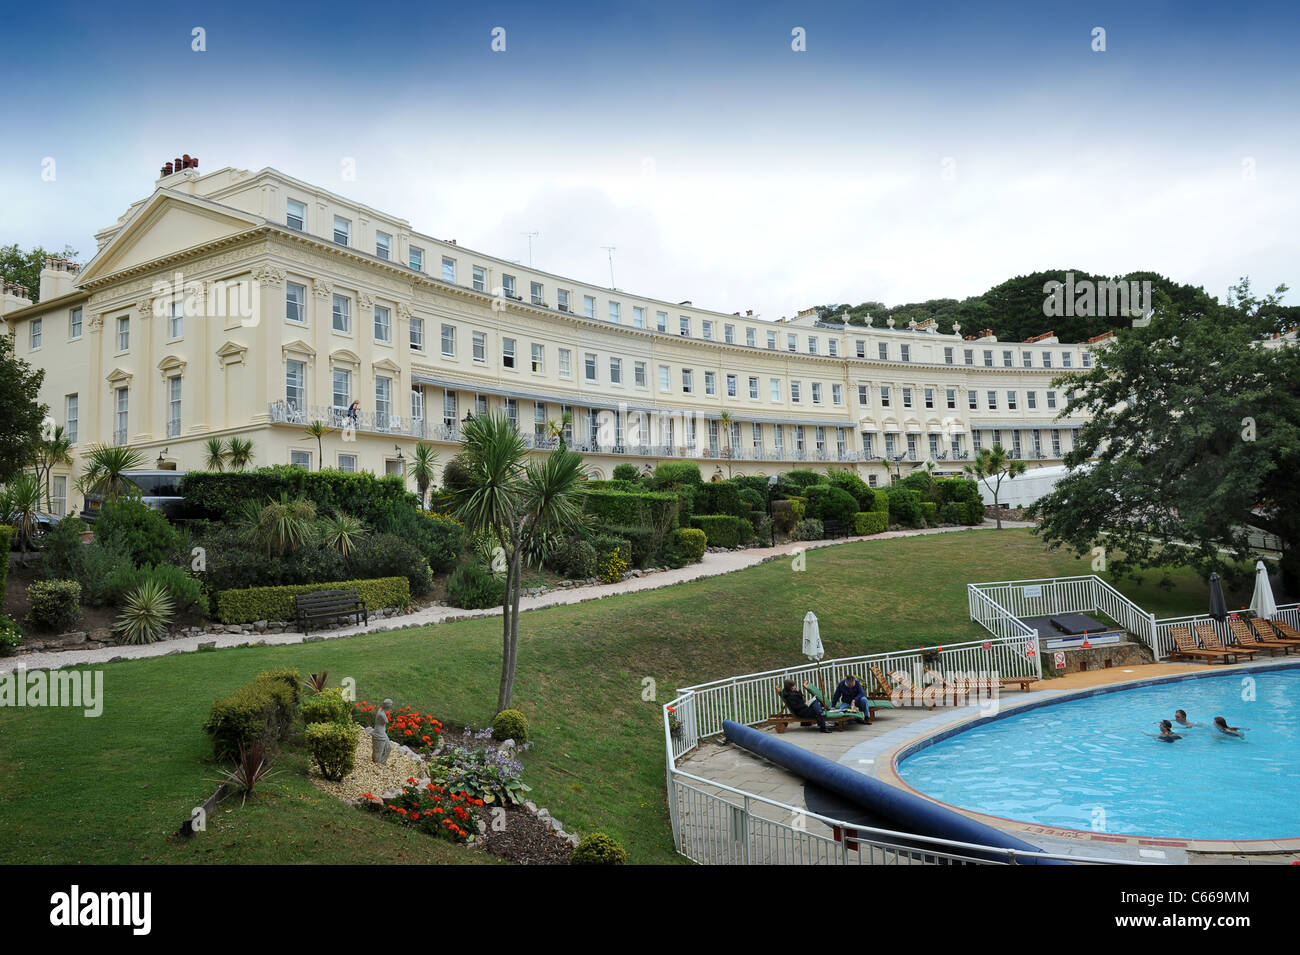 Osborne Hotel in Hesketh crescent Torquay on the English Riviera Stock Photo